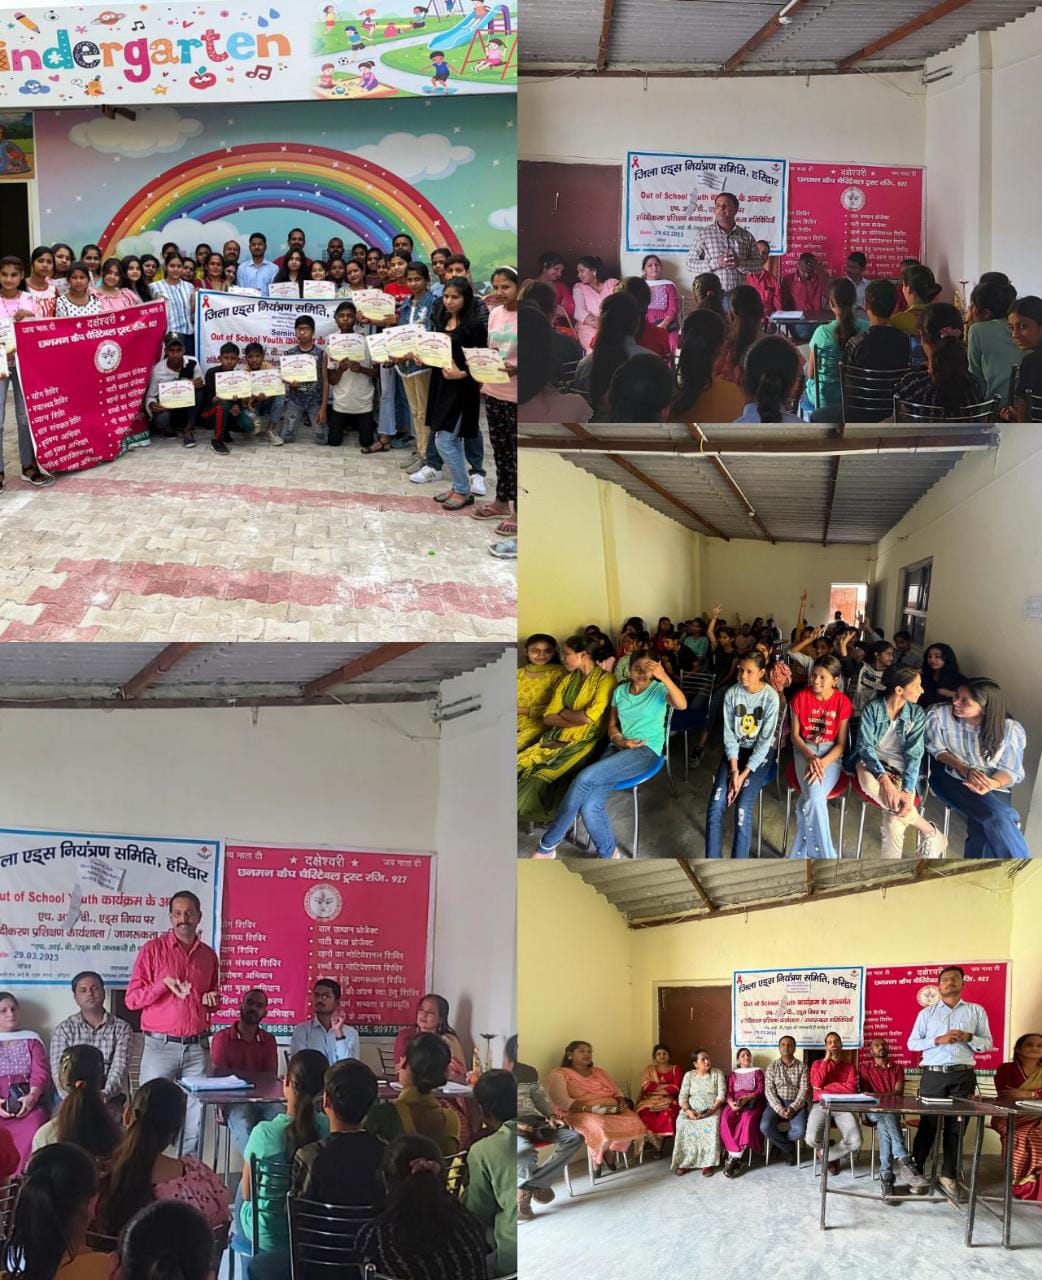 जिला एड्स नियंत्रण समिति व छनमन कैप चैरिटेबल ट्रस्ट ने किया जागरूकता कार्यशाला का आयोजन